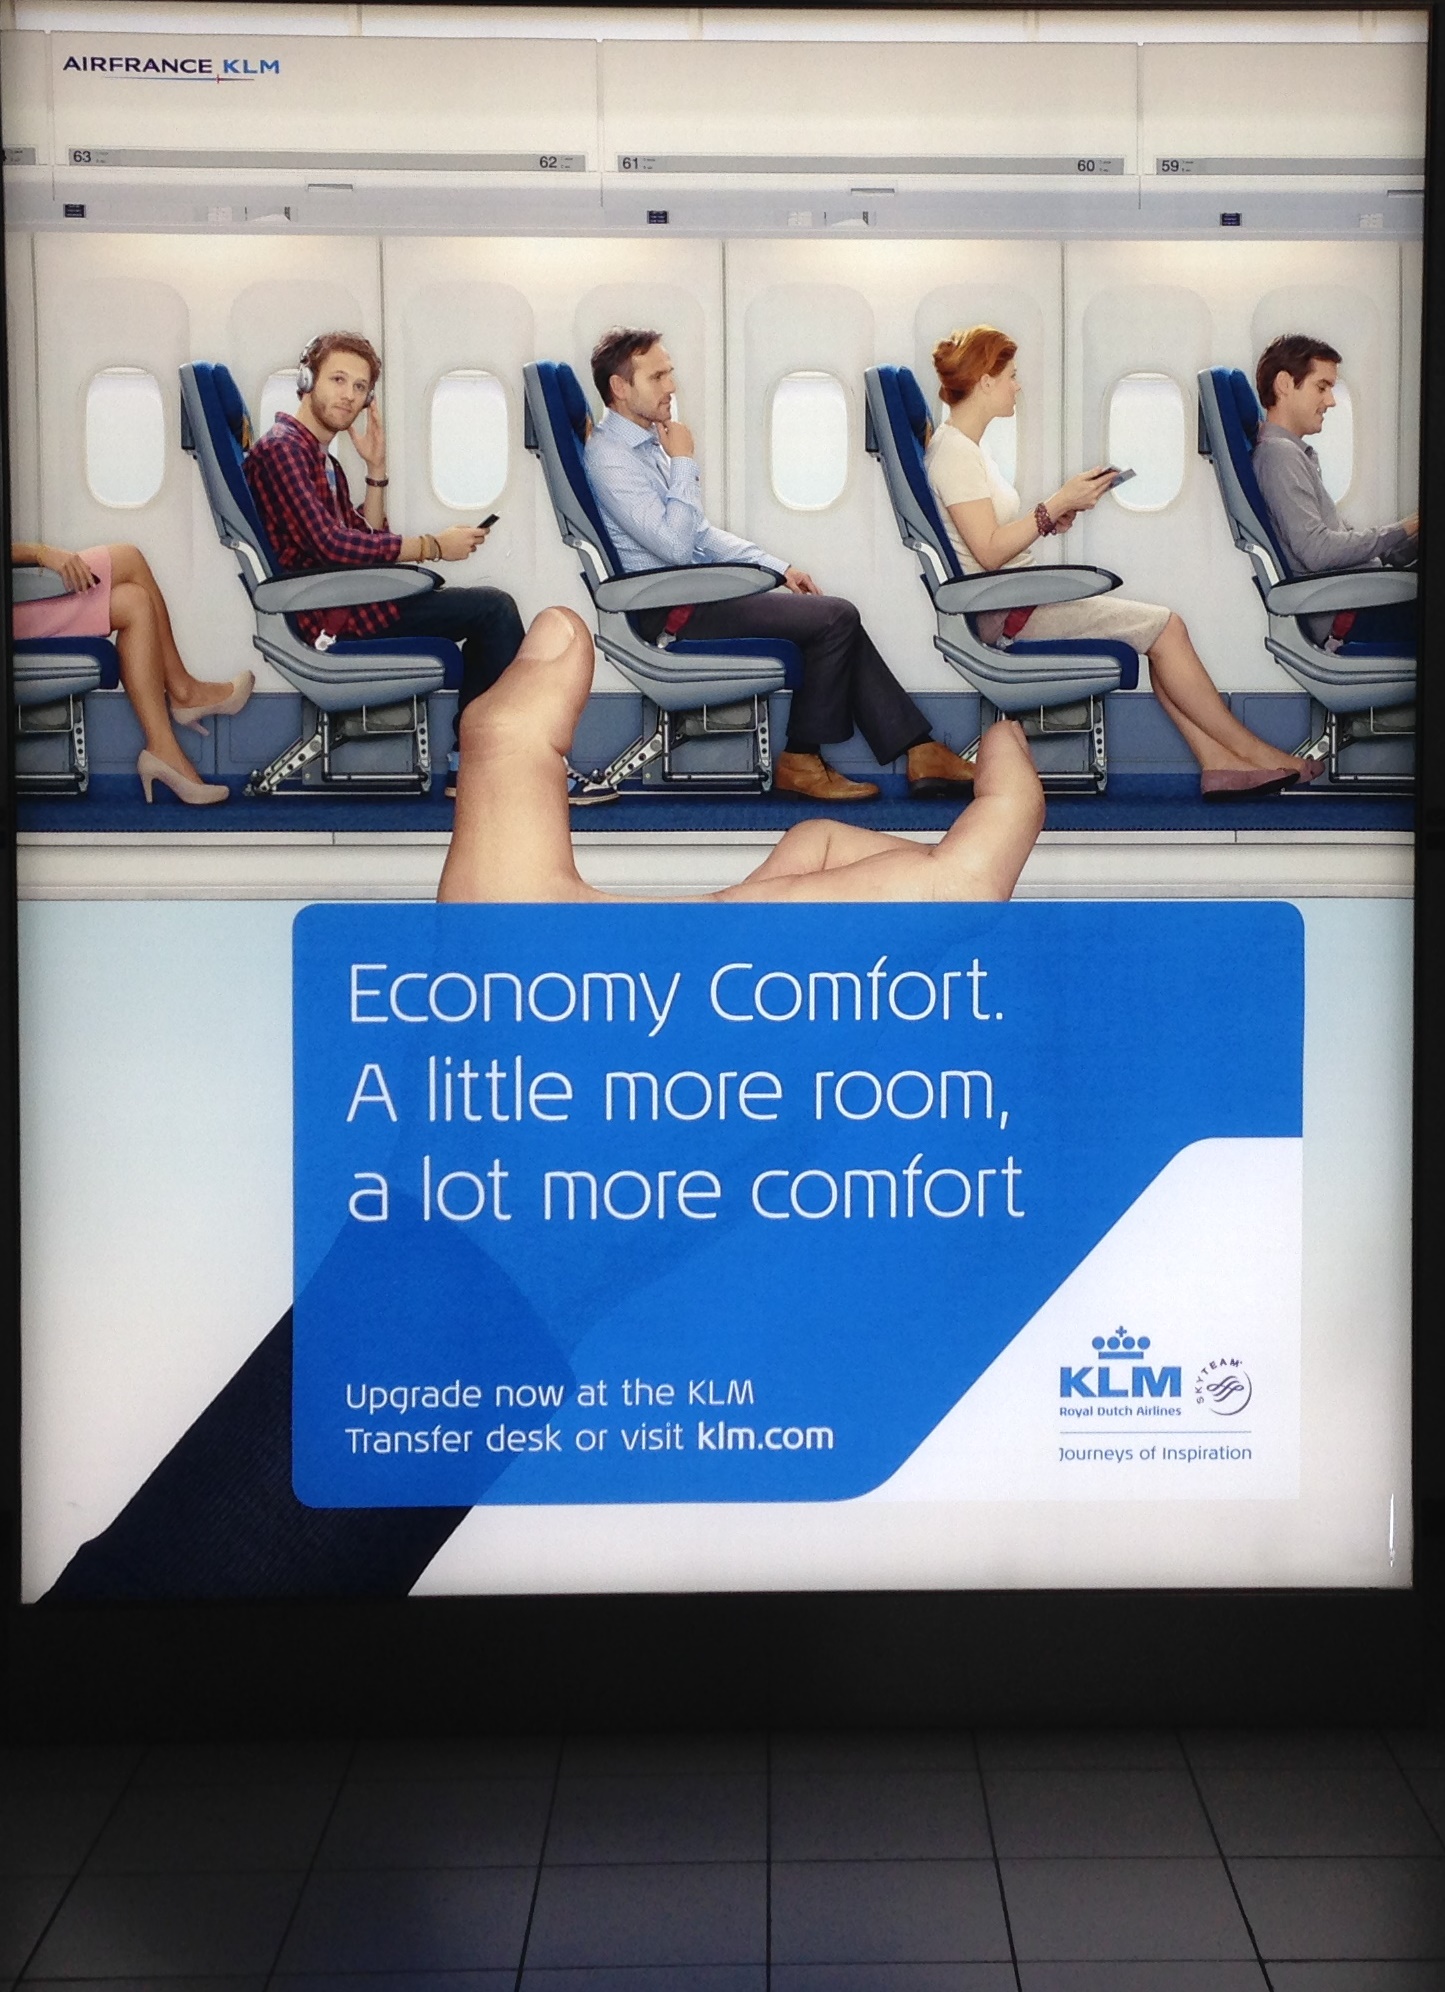 KLM Economy Comfort Ad @ Amsterdam Schiphol Airport